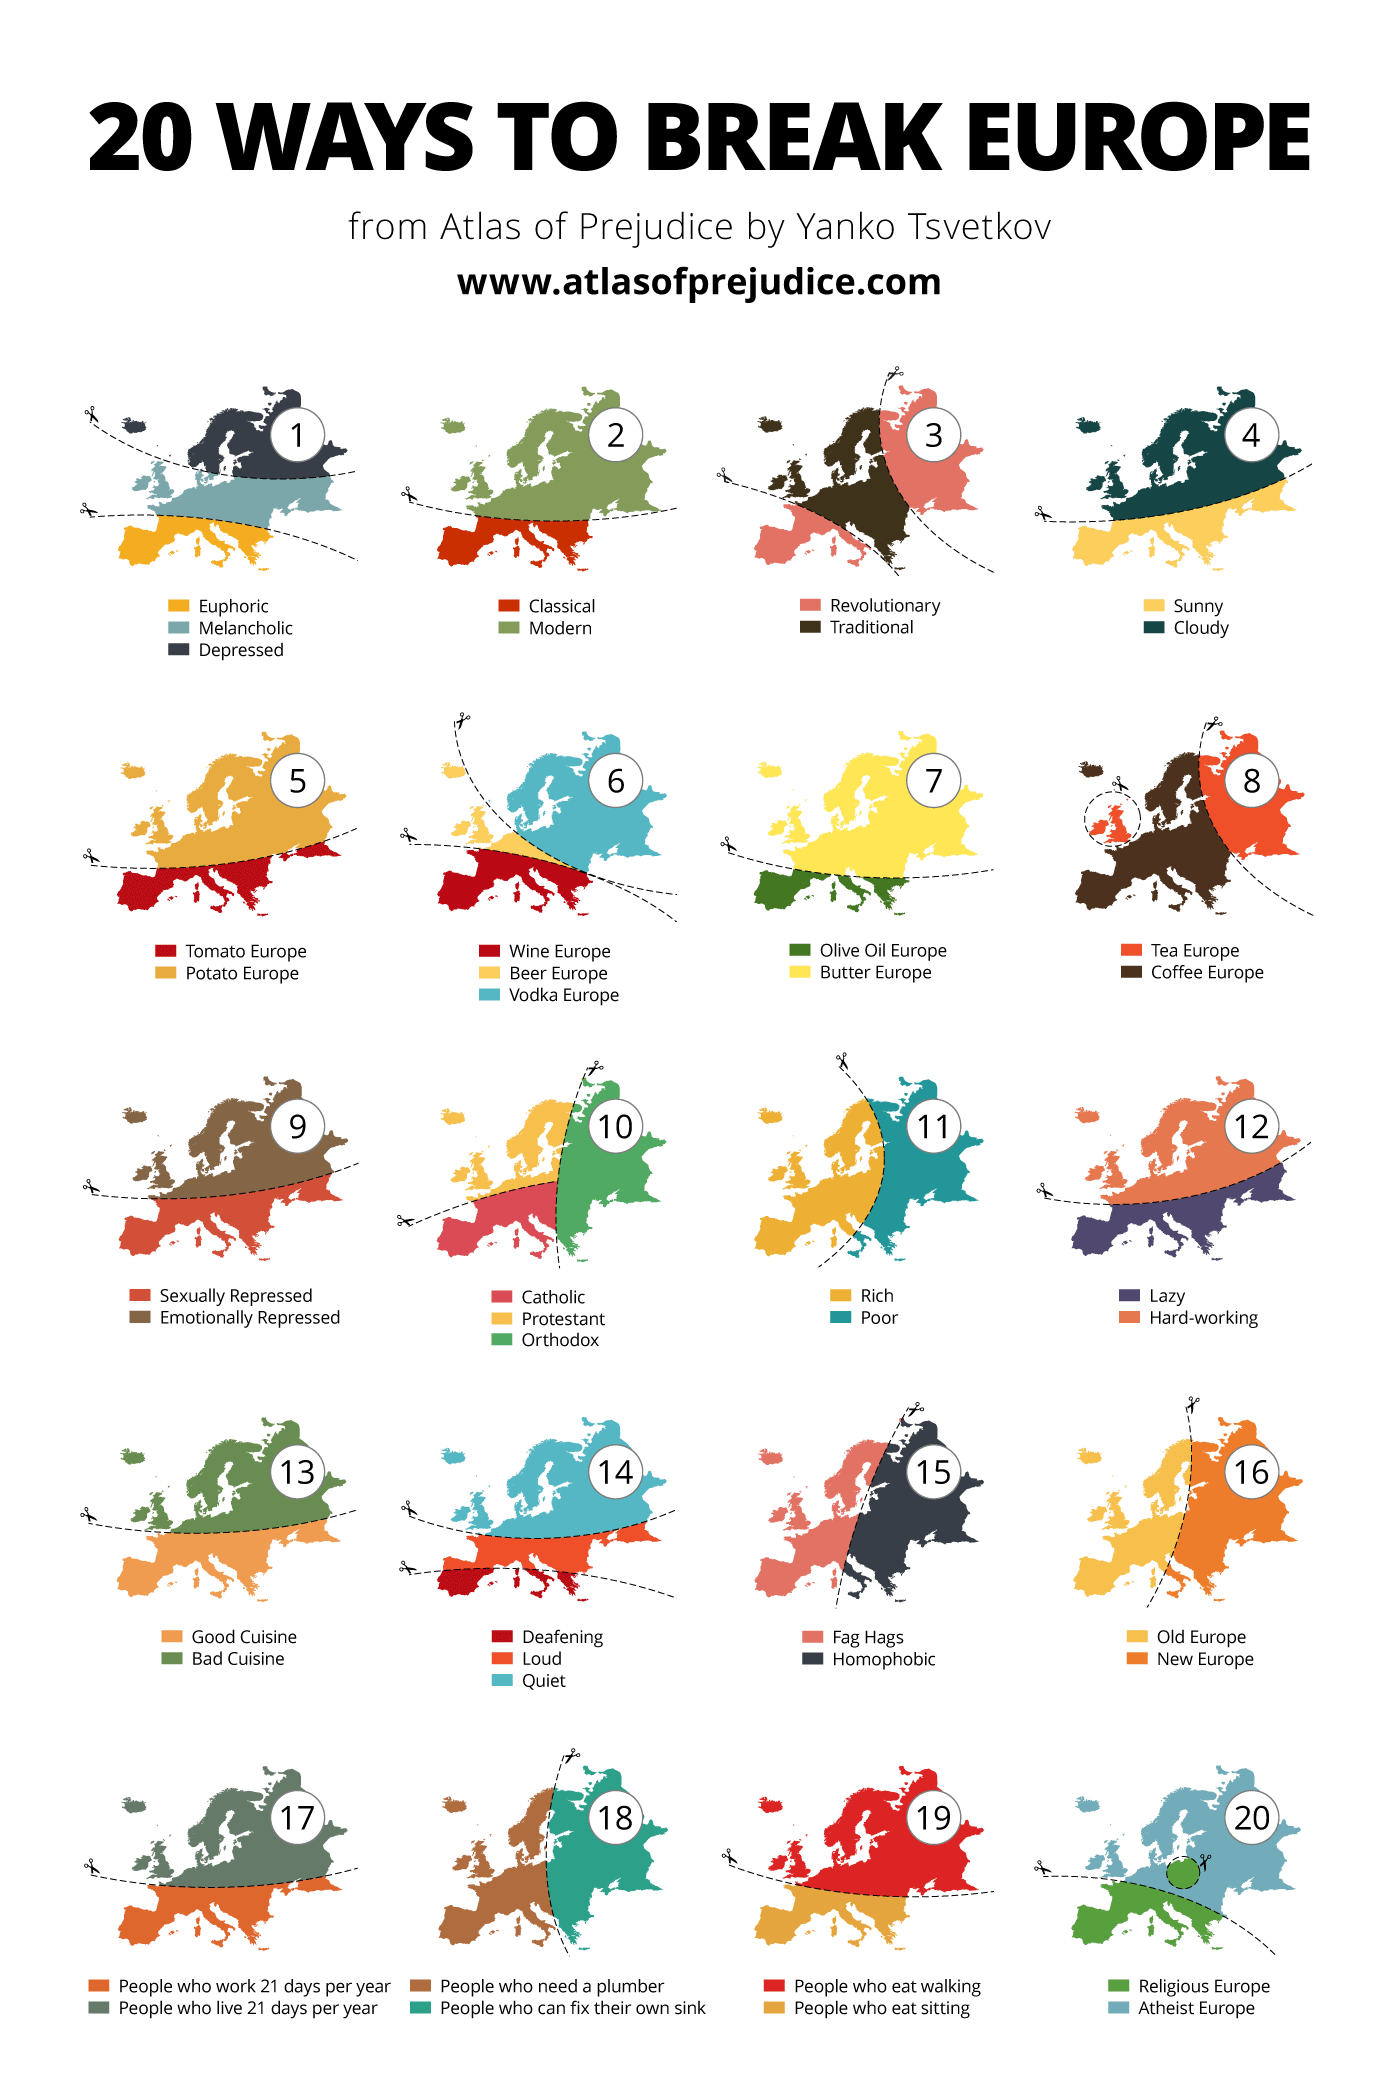 20 ways to break Europe